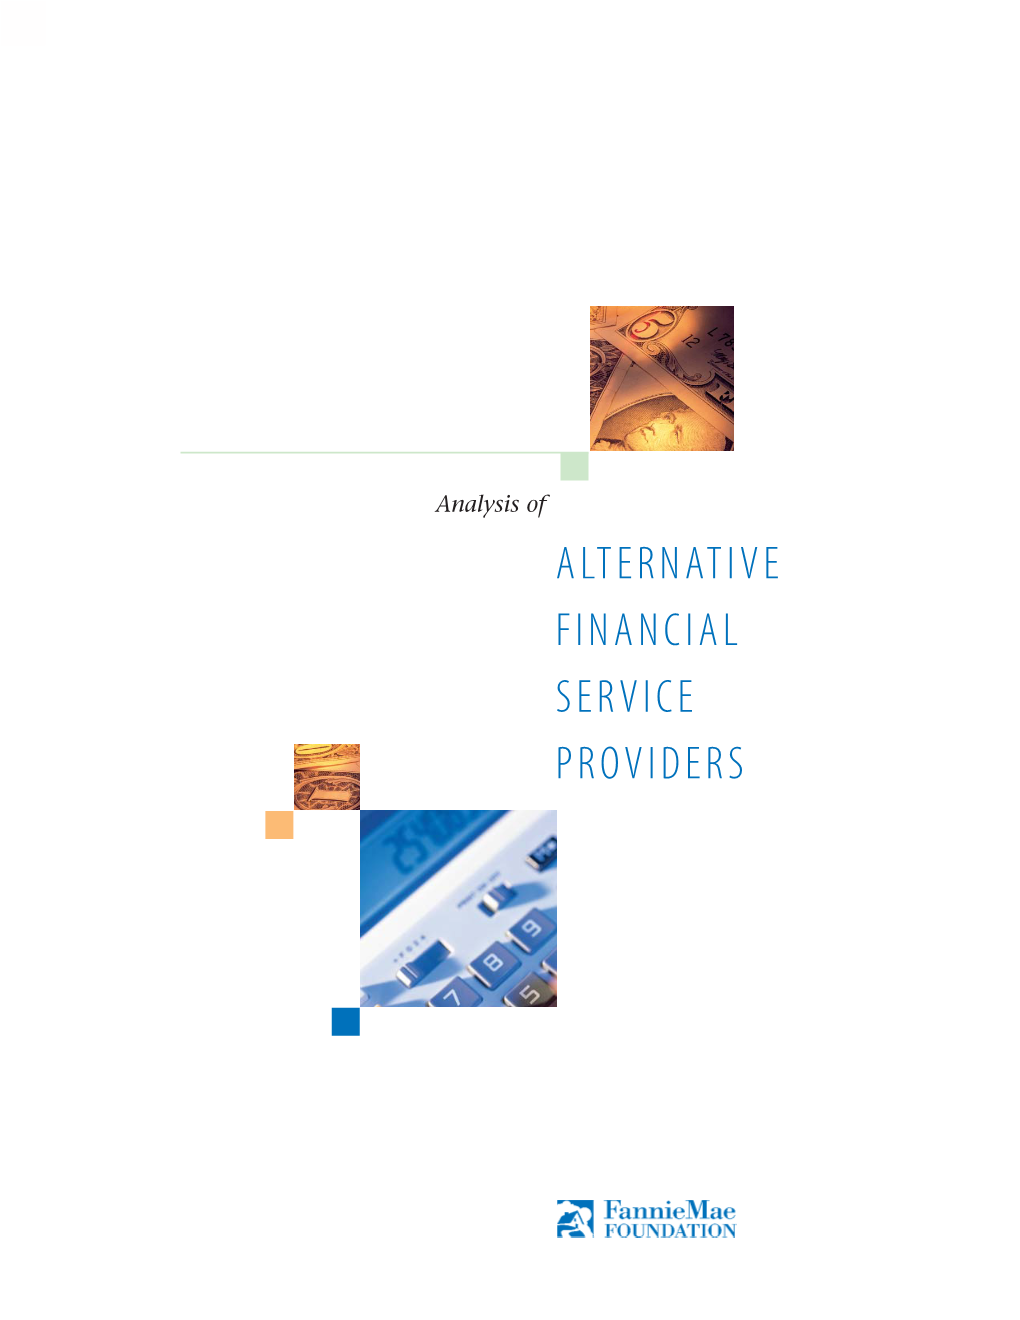 ALTERNATIVE FINANCIAL SERVICE PROVIDERS Analysis of ALTERNATIVE FINANCIAL SERVICE PROVIDERS